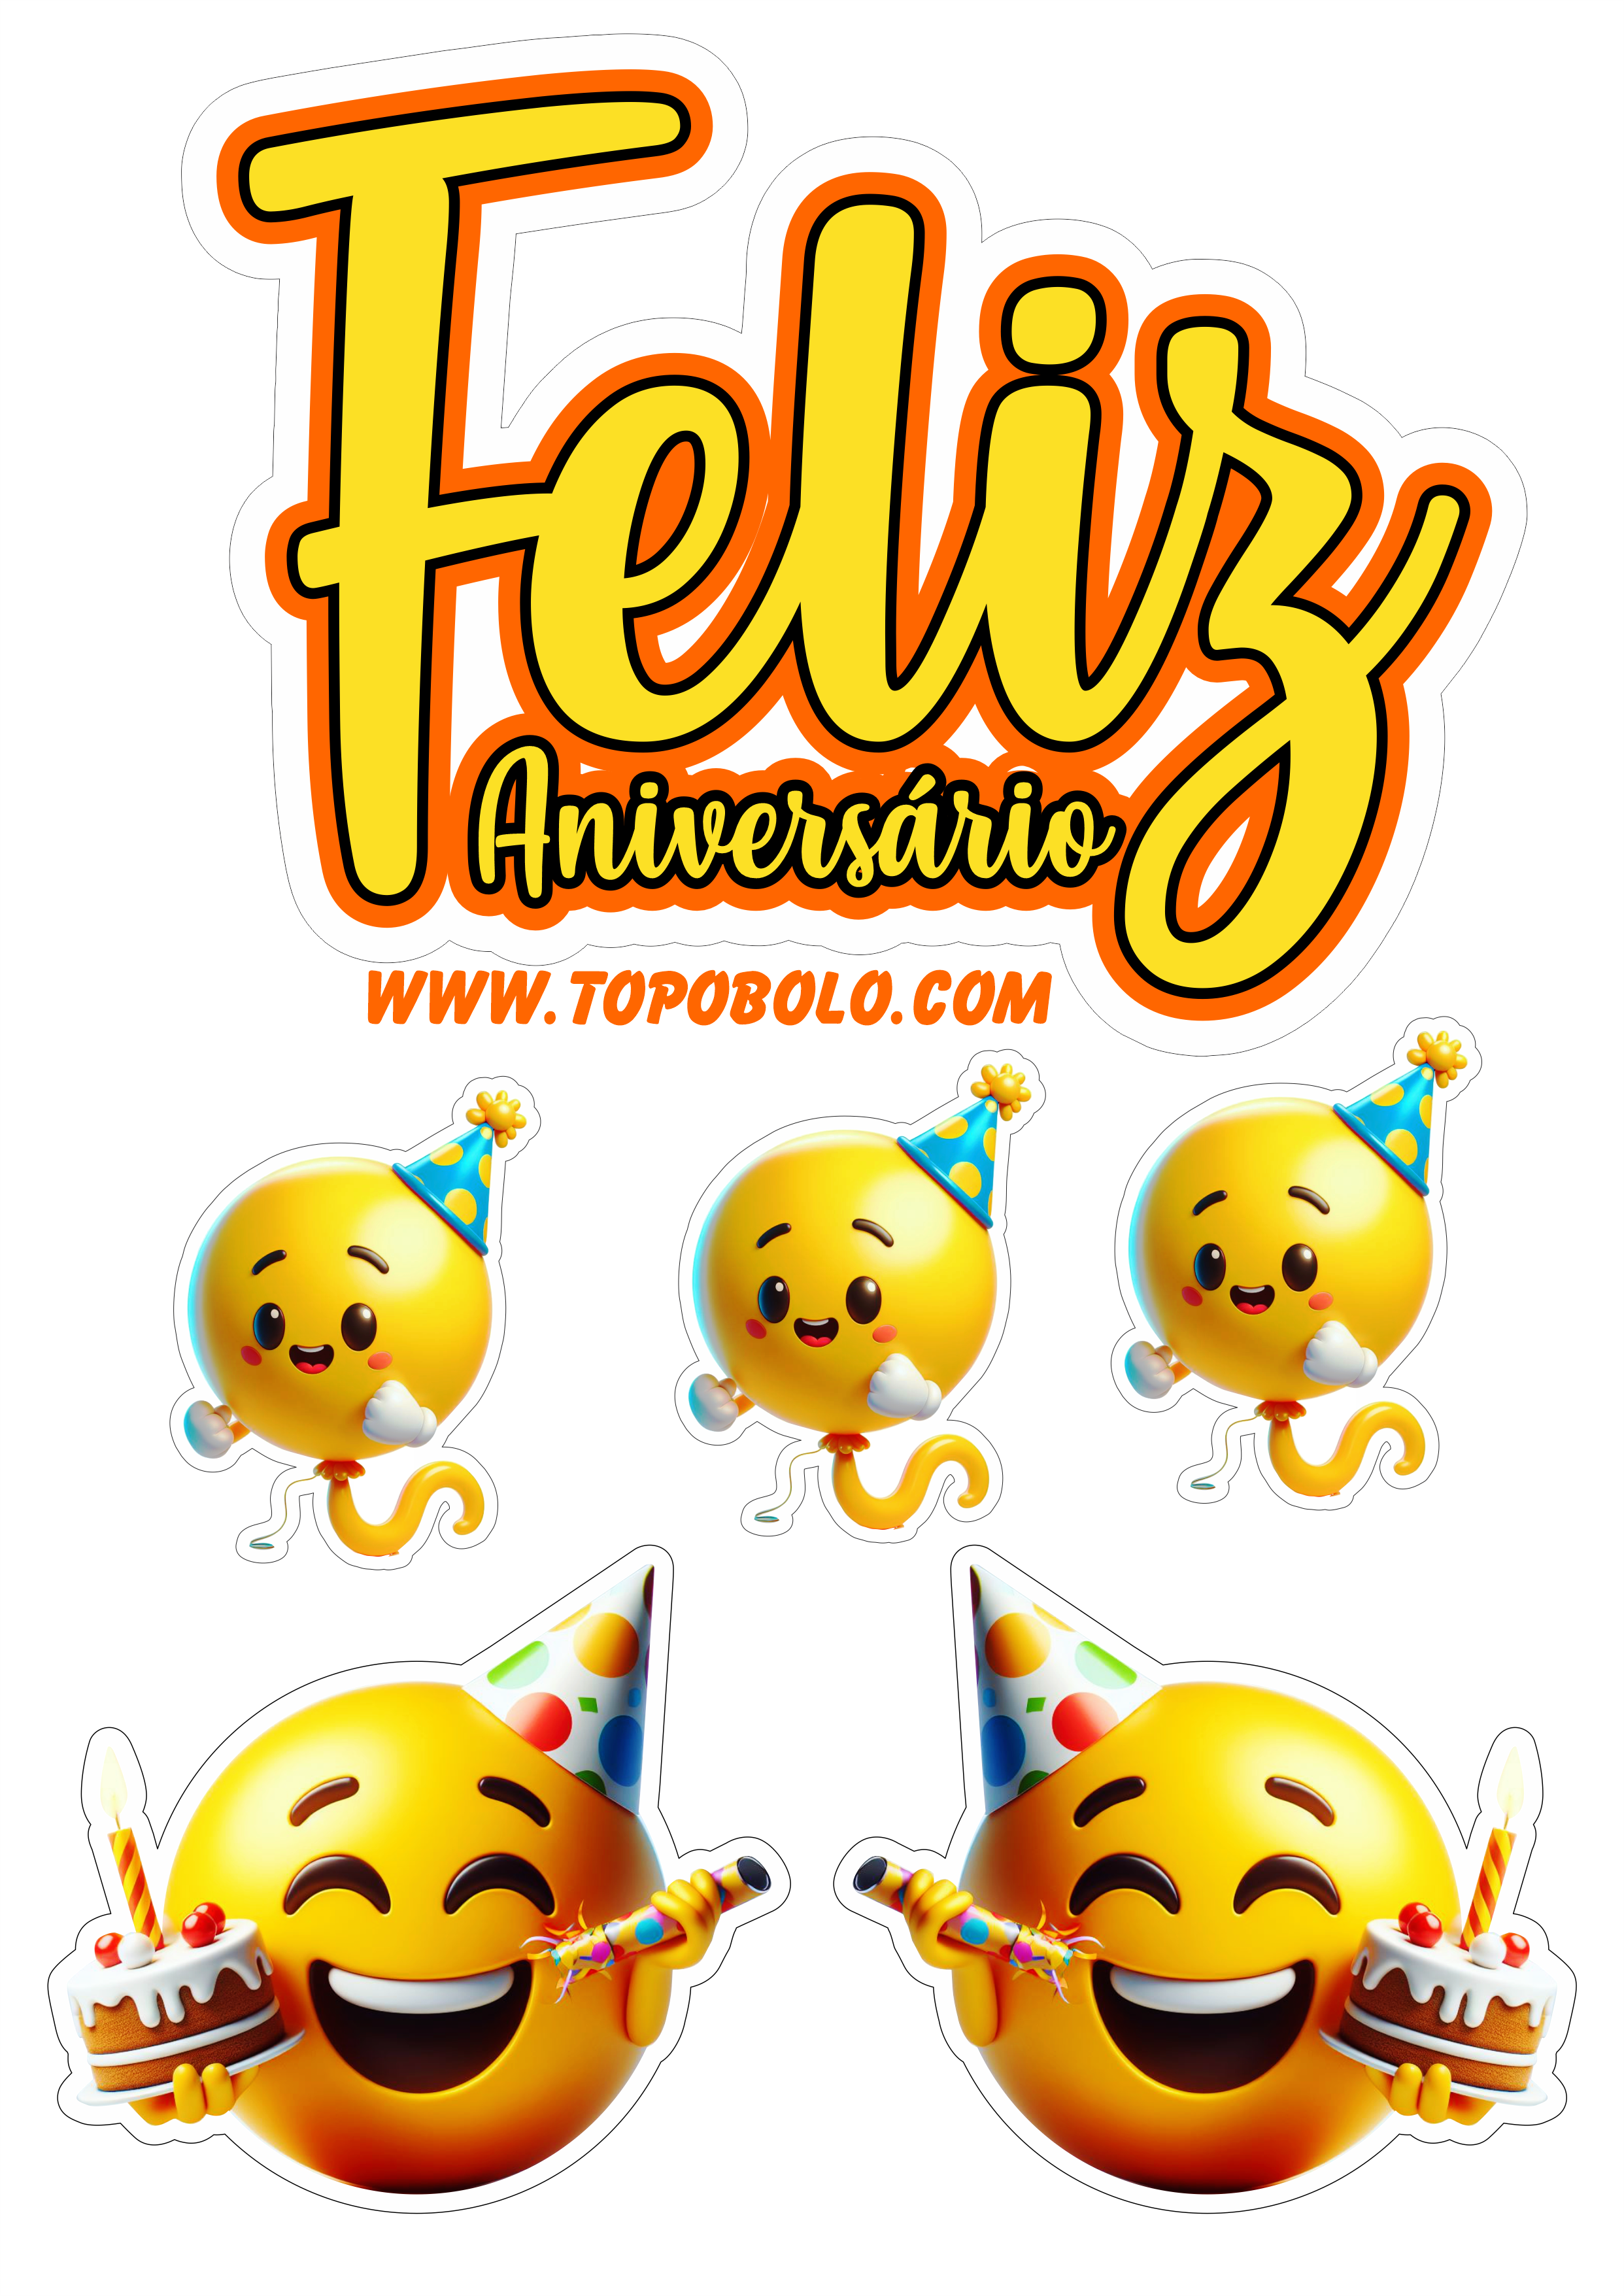 Topo de bolo feliz aniversário emojis engraçados festa personalizada png